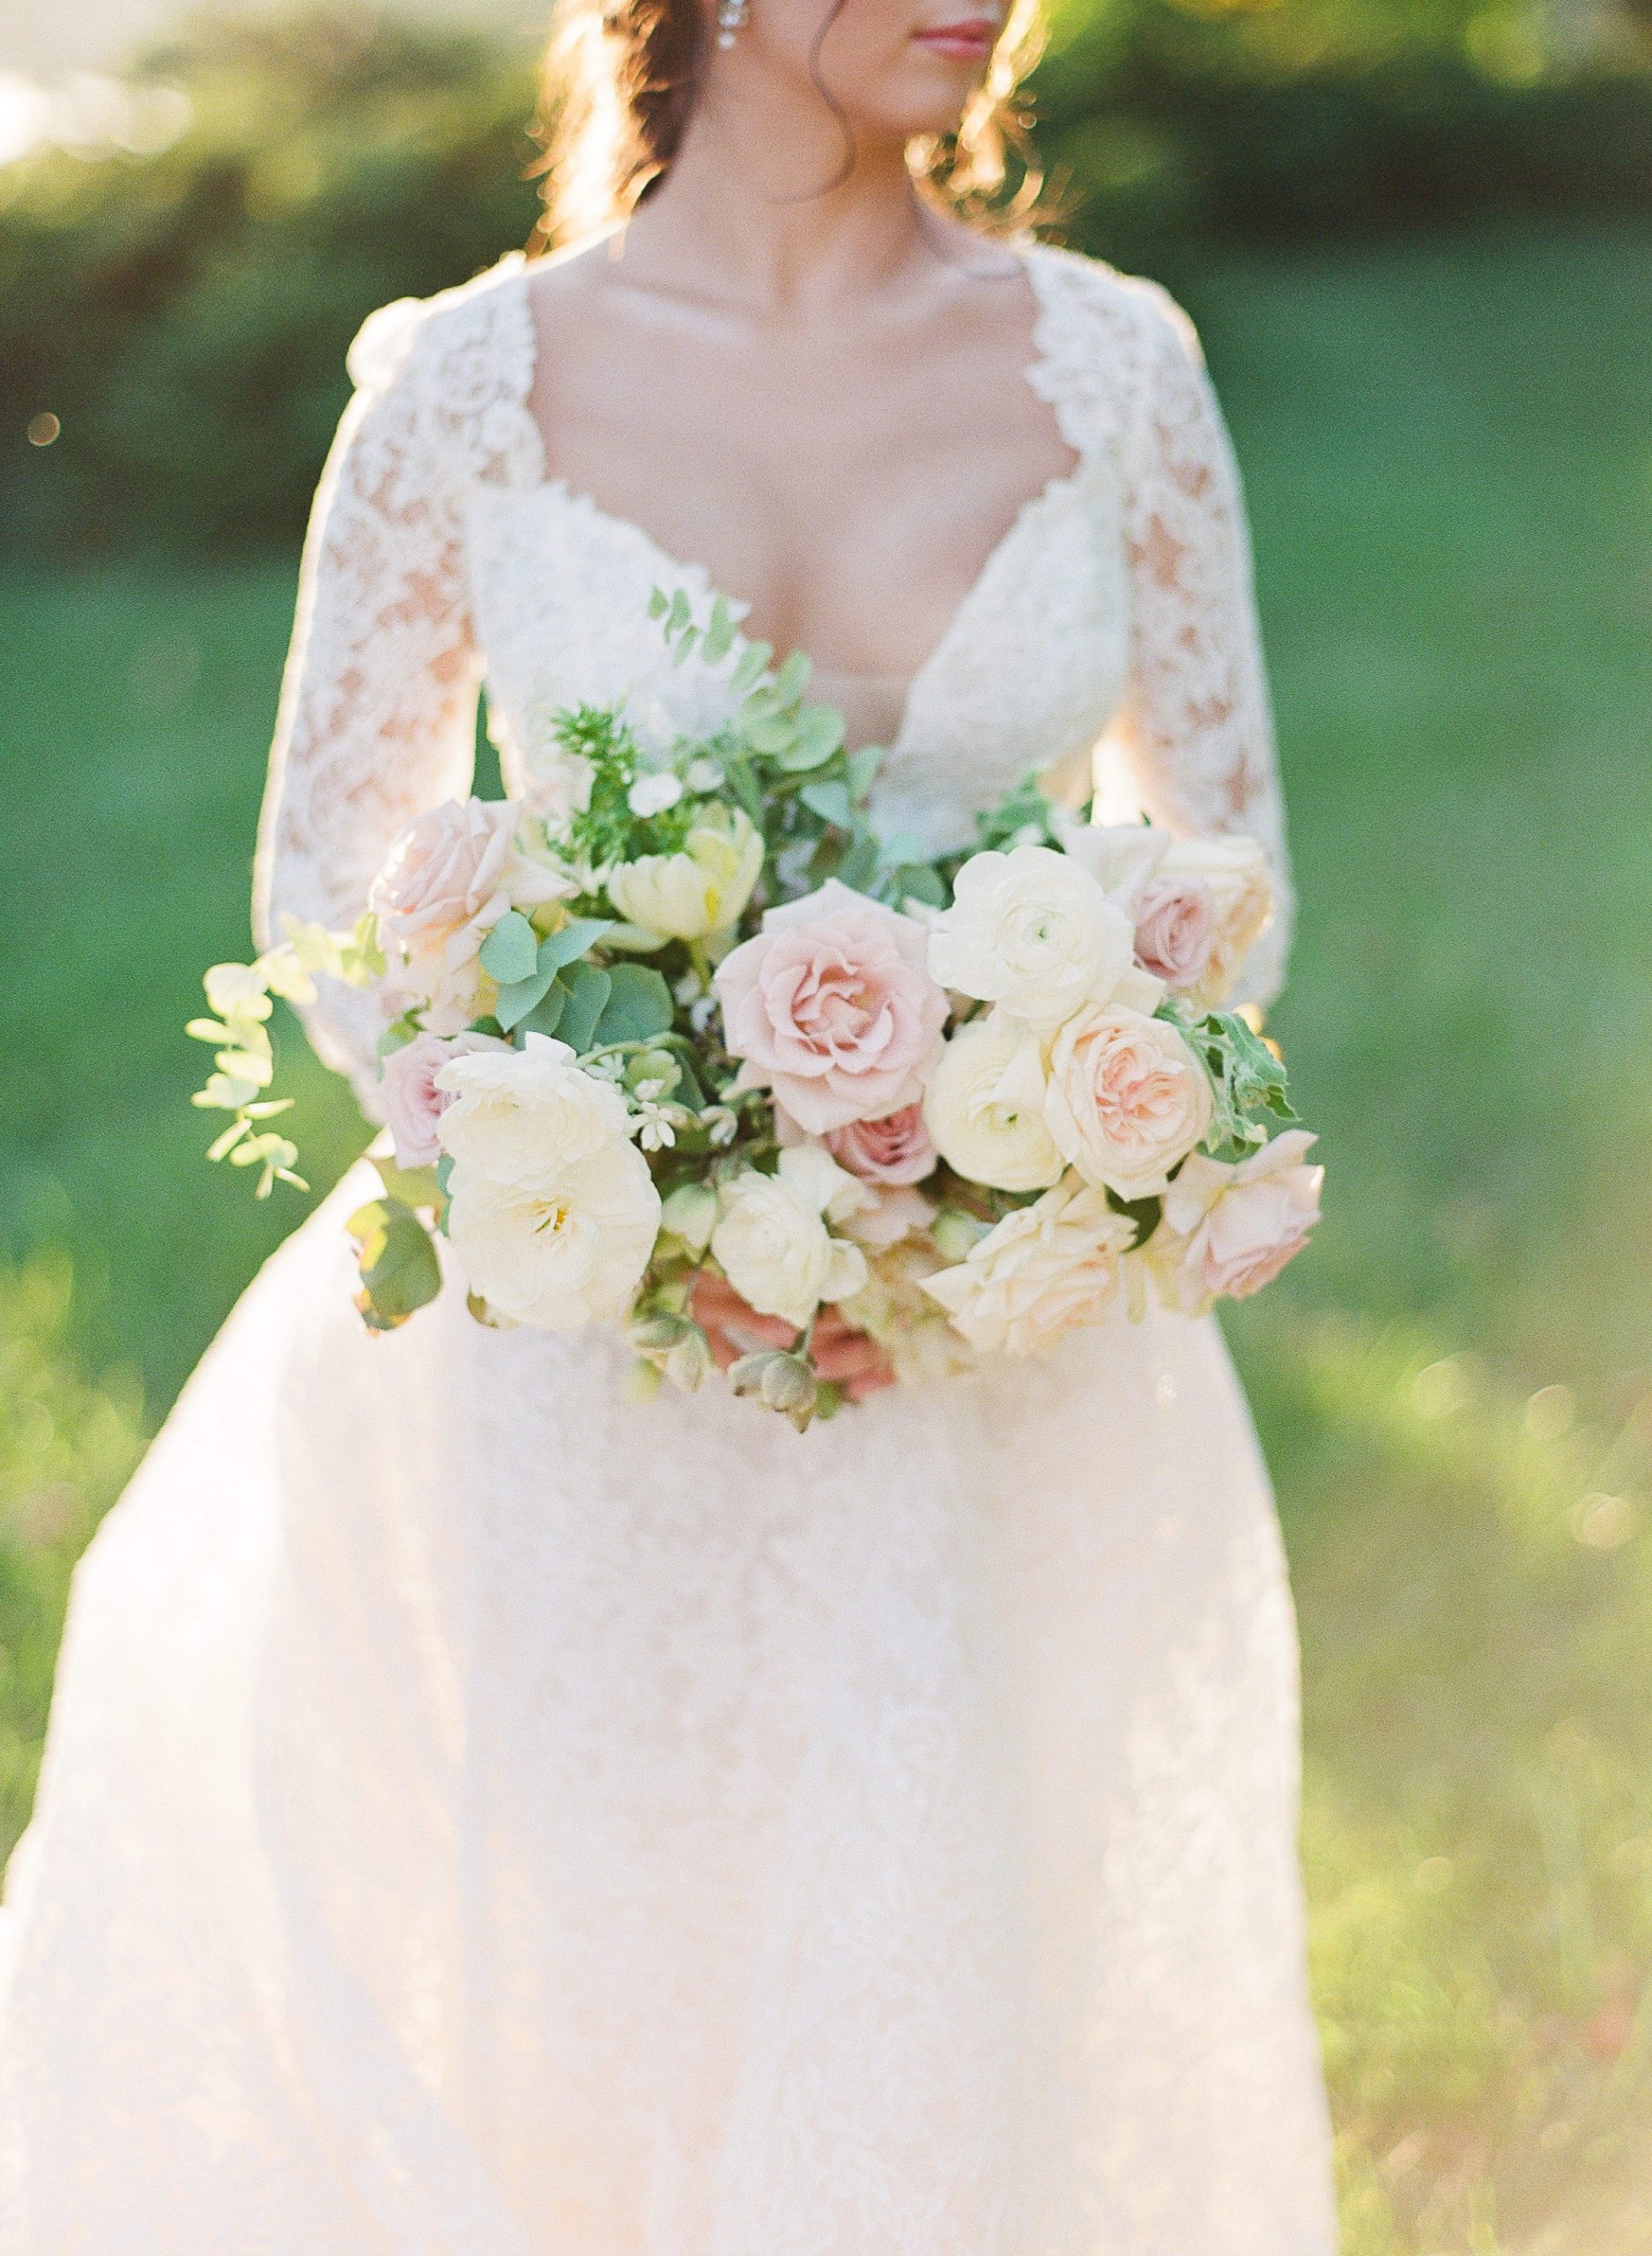 Bride Holding Blush and White Bridal Bouquet Photo